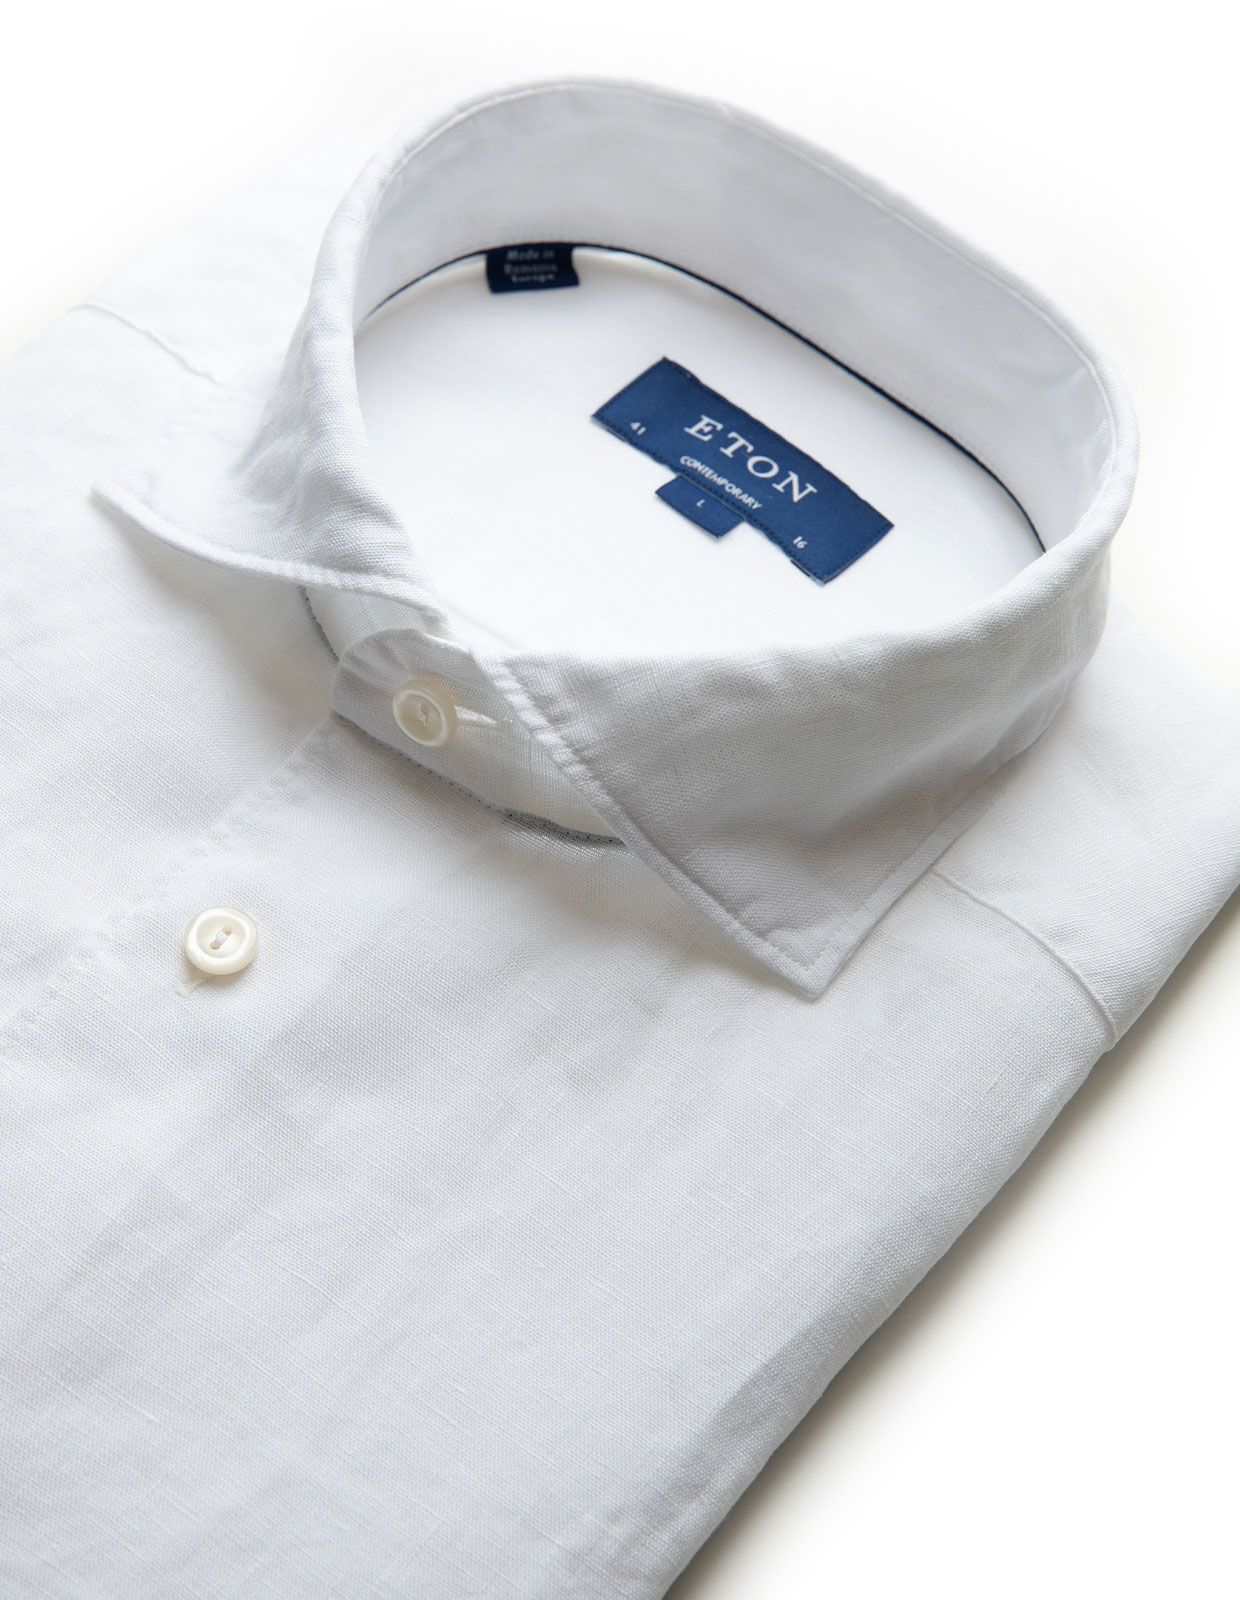 Contemporary Fit Soft Linen Shirt White